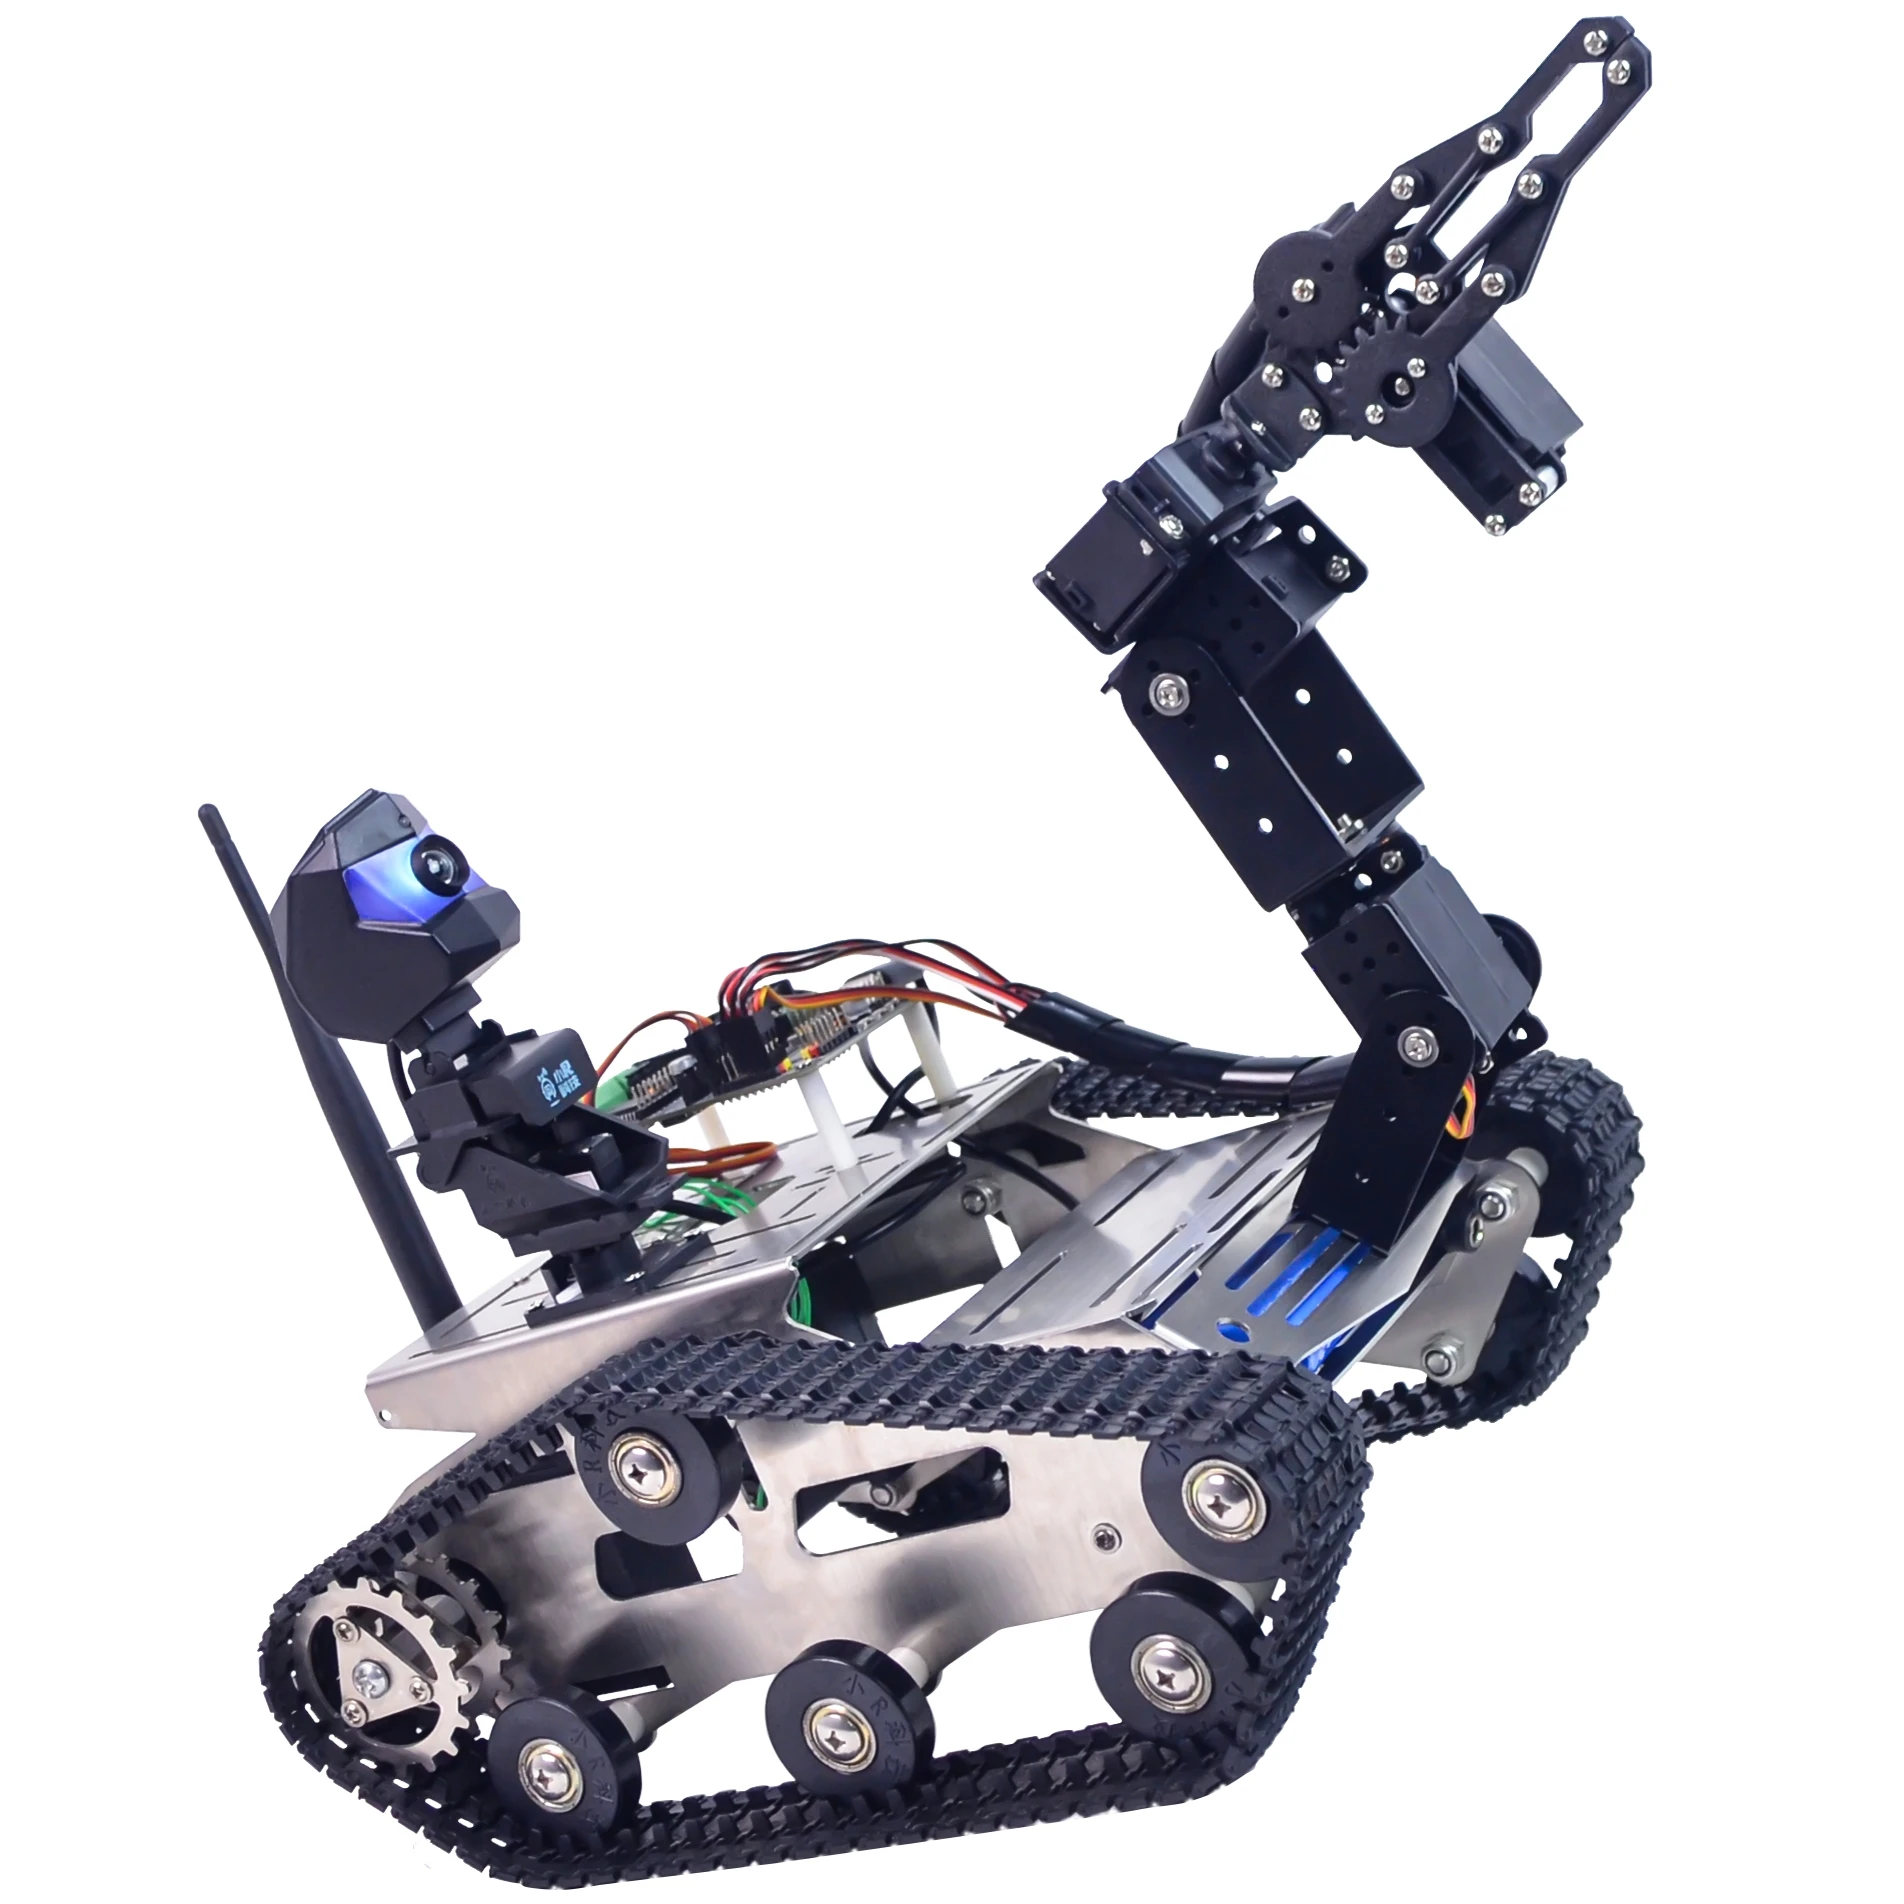 XiaoR Geek Hot sale TH Toy Robot Tank Car DIY wireless WIFI smart robot car with AR DUINO 2560 style robot car